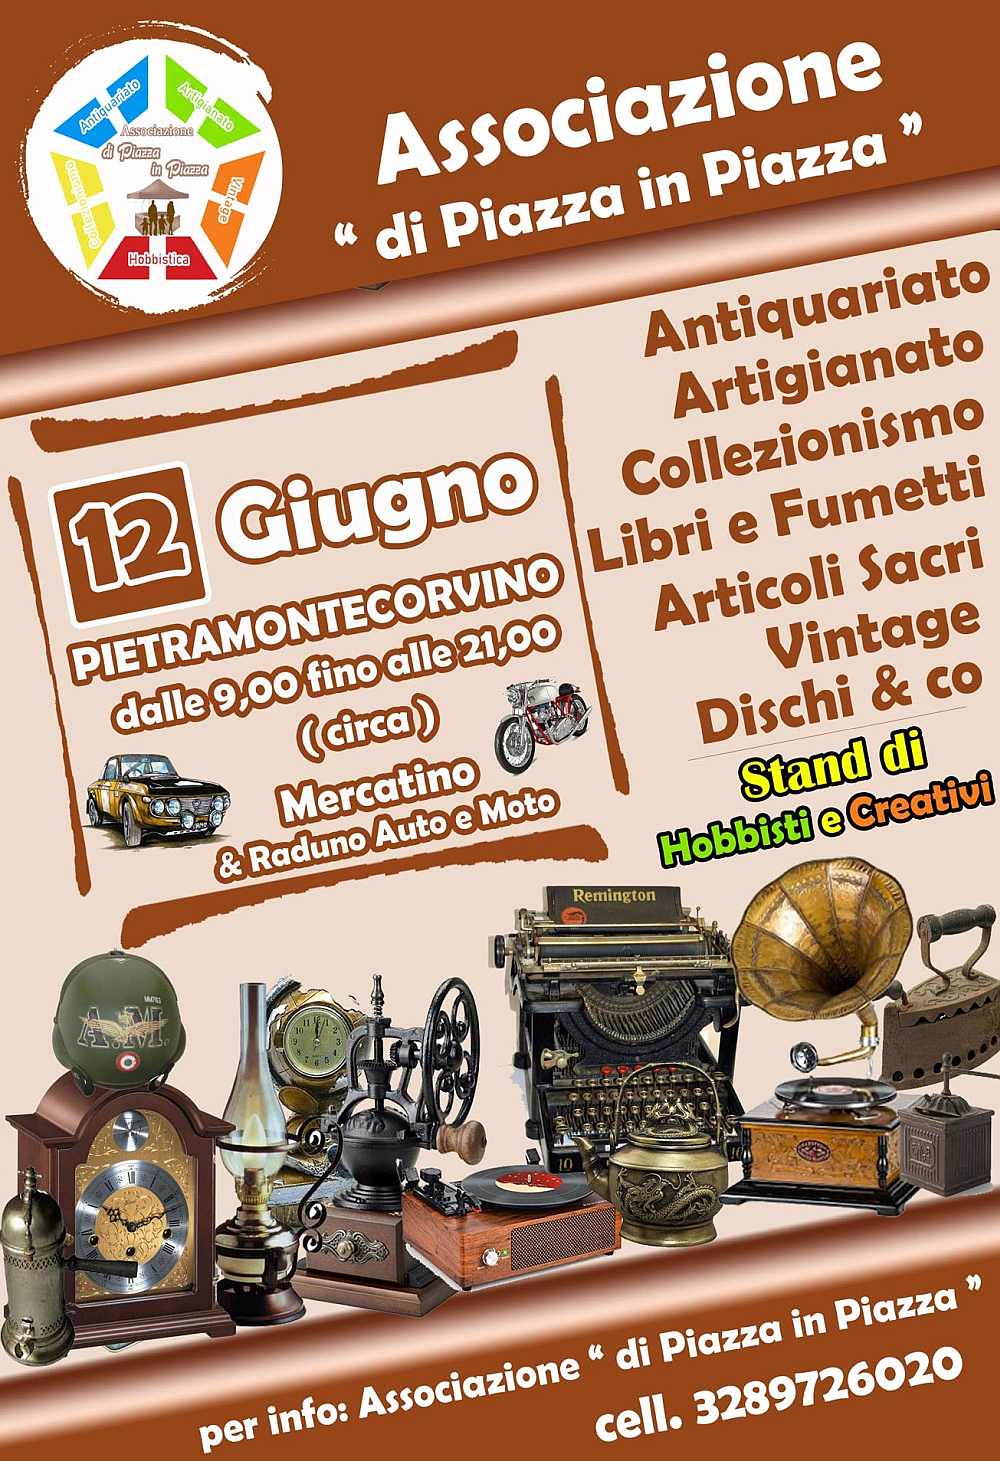 Pietramontecorvino (FG)
"Motori e Sapori al Borgo"
12 Giugno 2022 